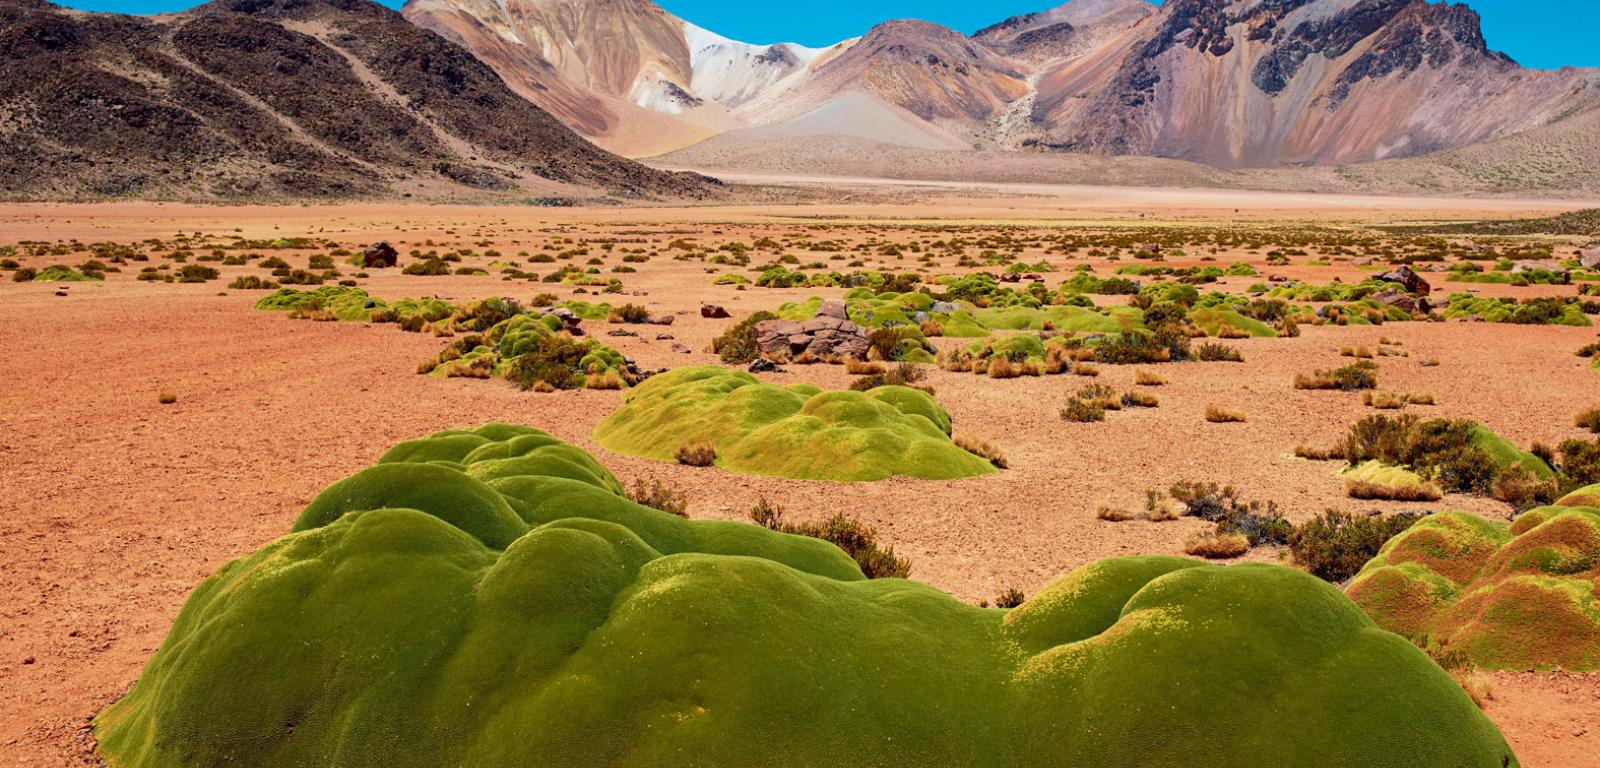 Laretie porastające pustynię Atakama (Chile).